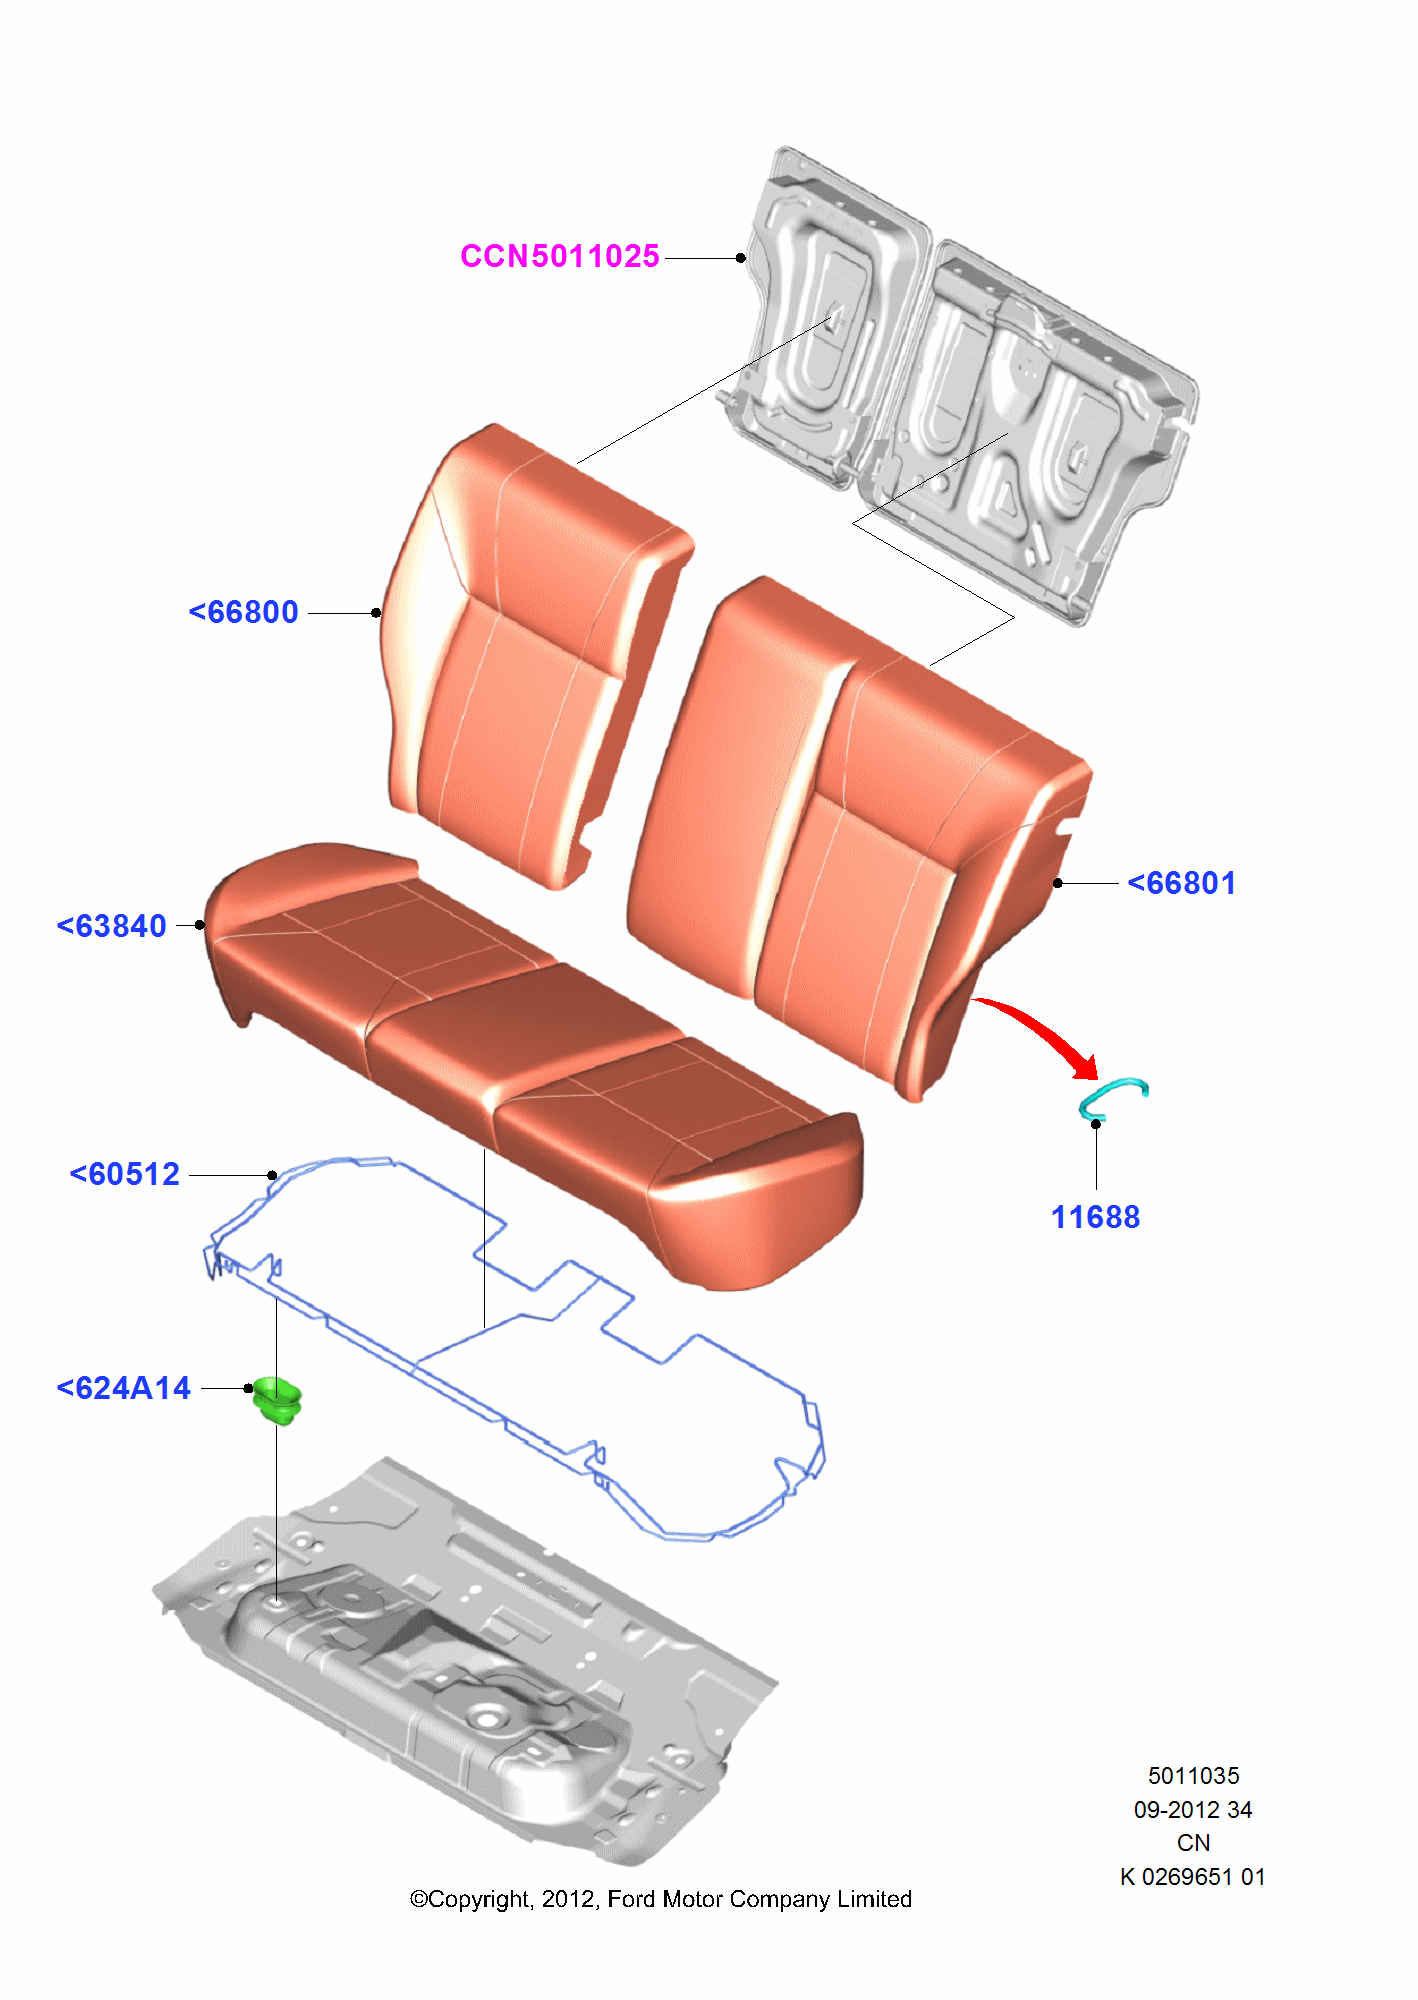 Rear Seat Pads/Valances & Heating สำหรับ Ford Fiesta Fiesta 2012-                  (CCN)